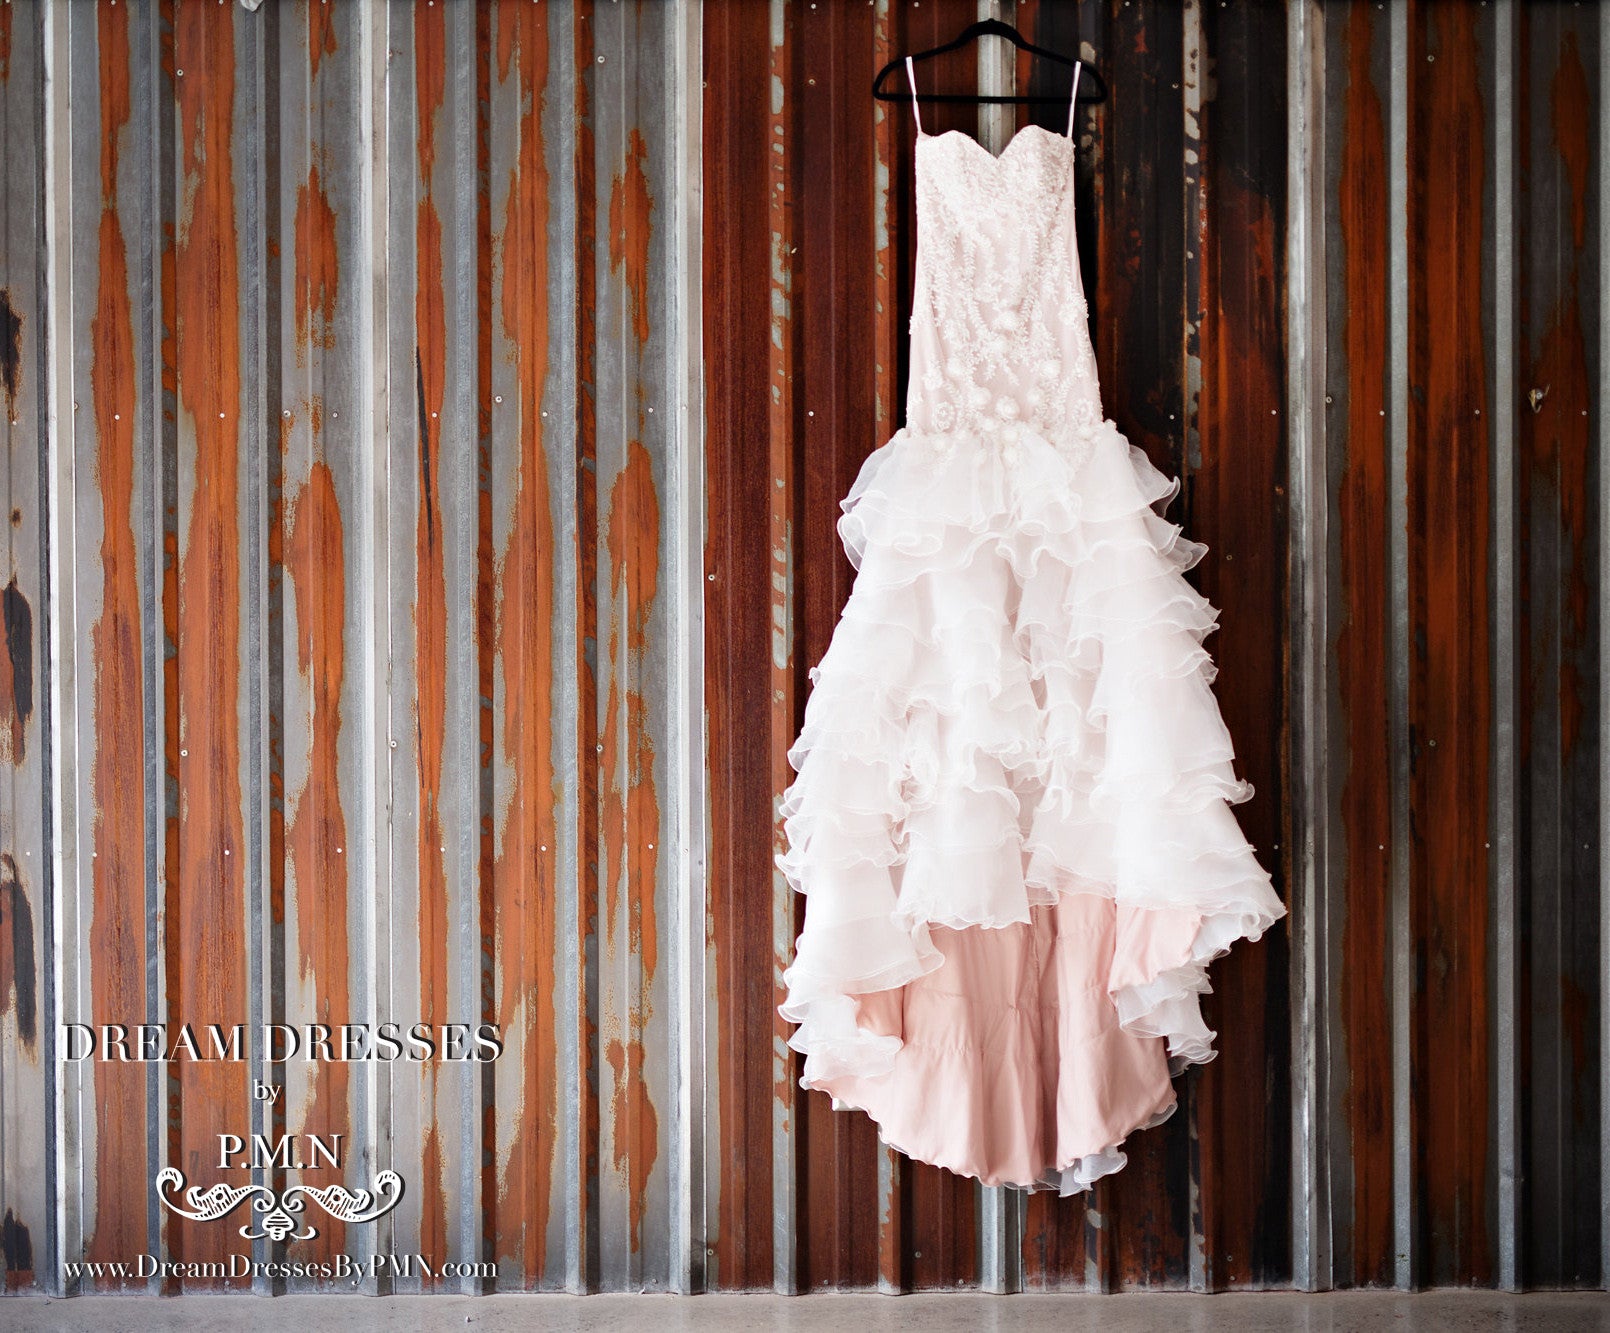 Blush Wedding Dress Archives - Houston Wedding Blog